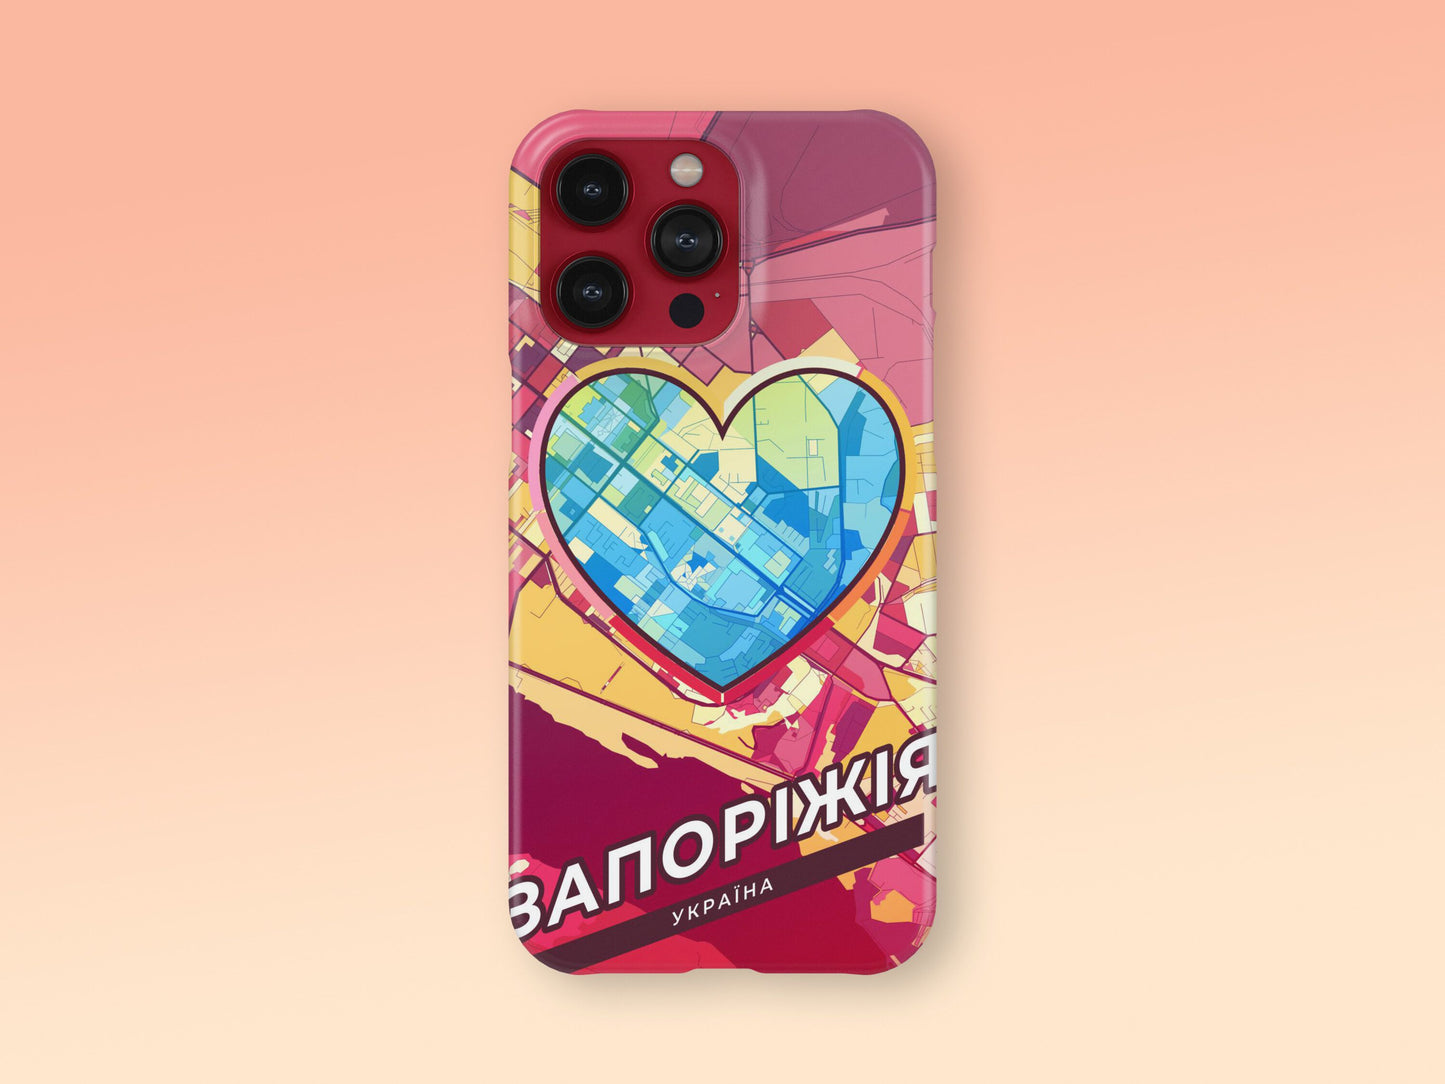 Zaporizhia Ukraine slim phone case with colorful icon 2